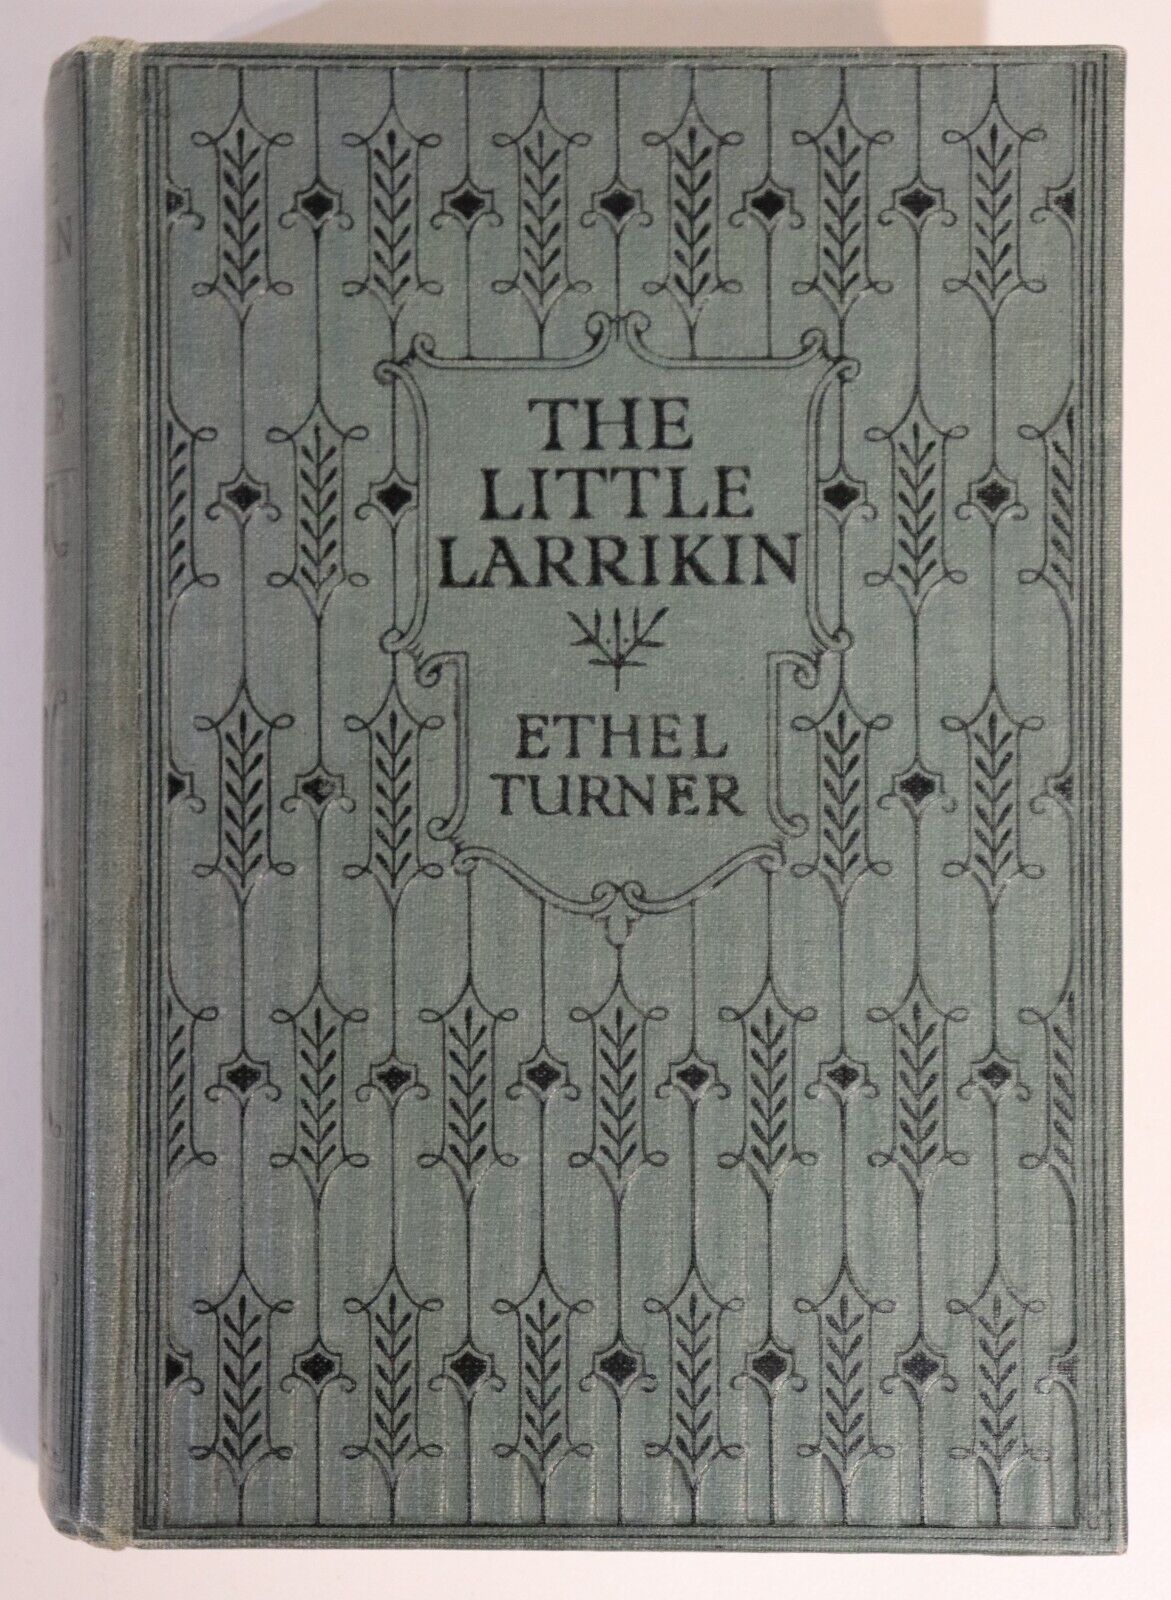 The Little Larrikin by Ethel Turner - c1910 - Antique Australian Fiction Book